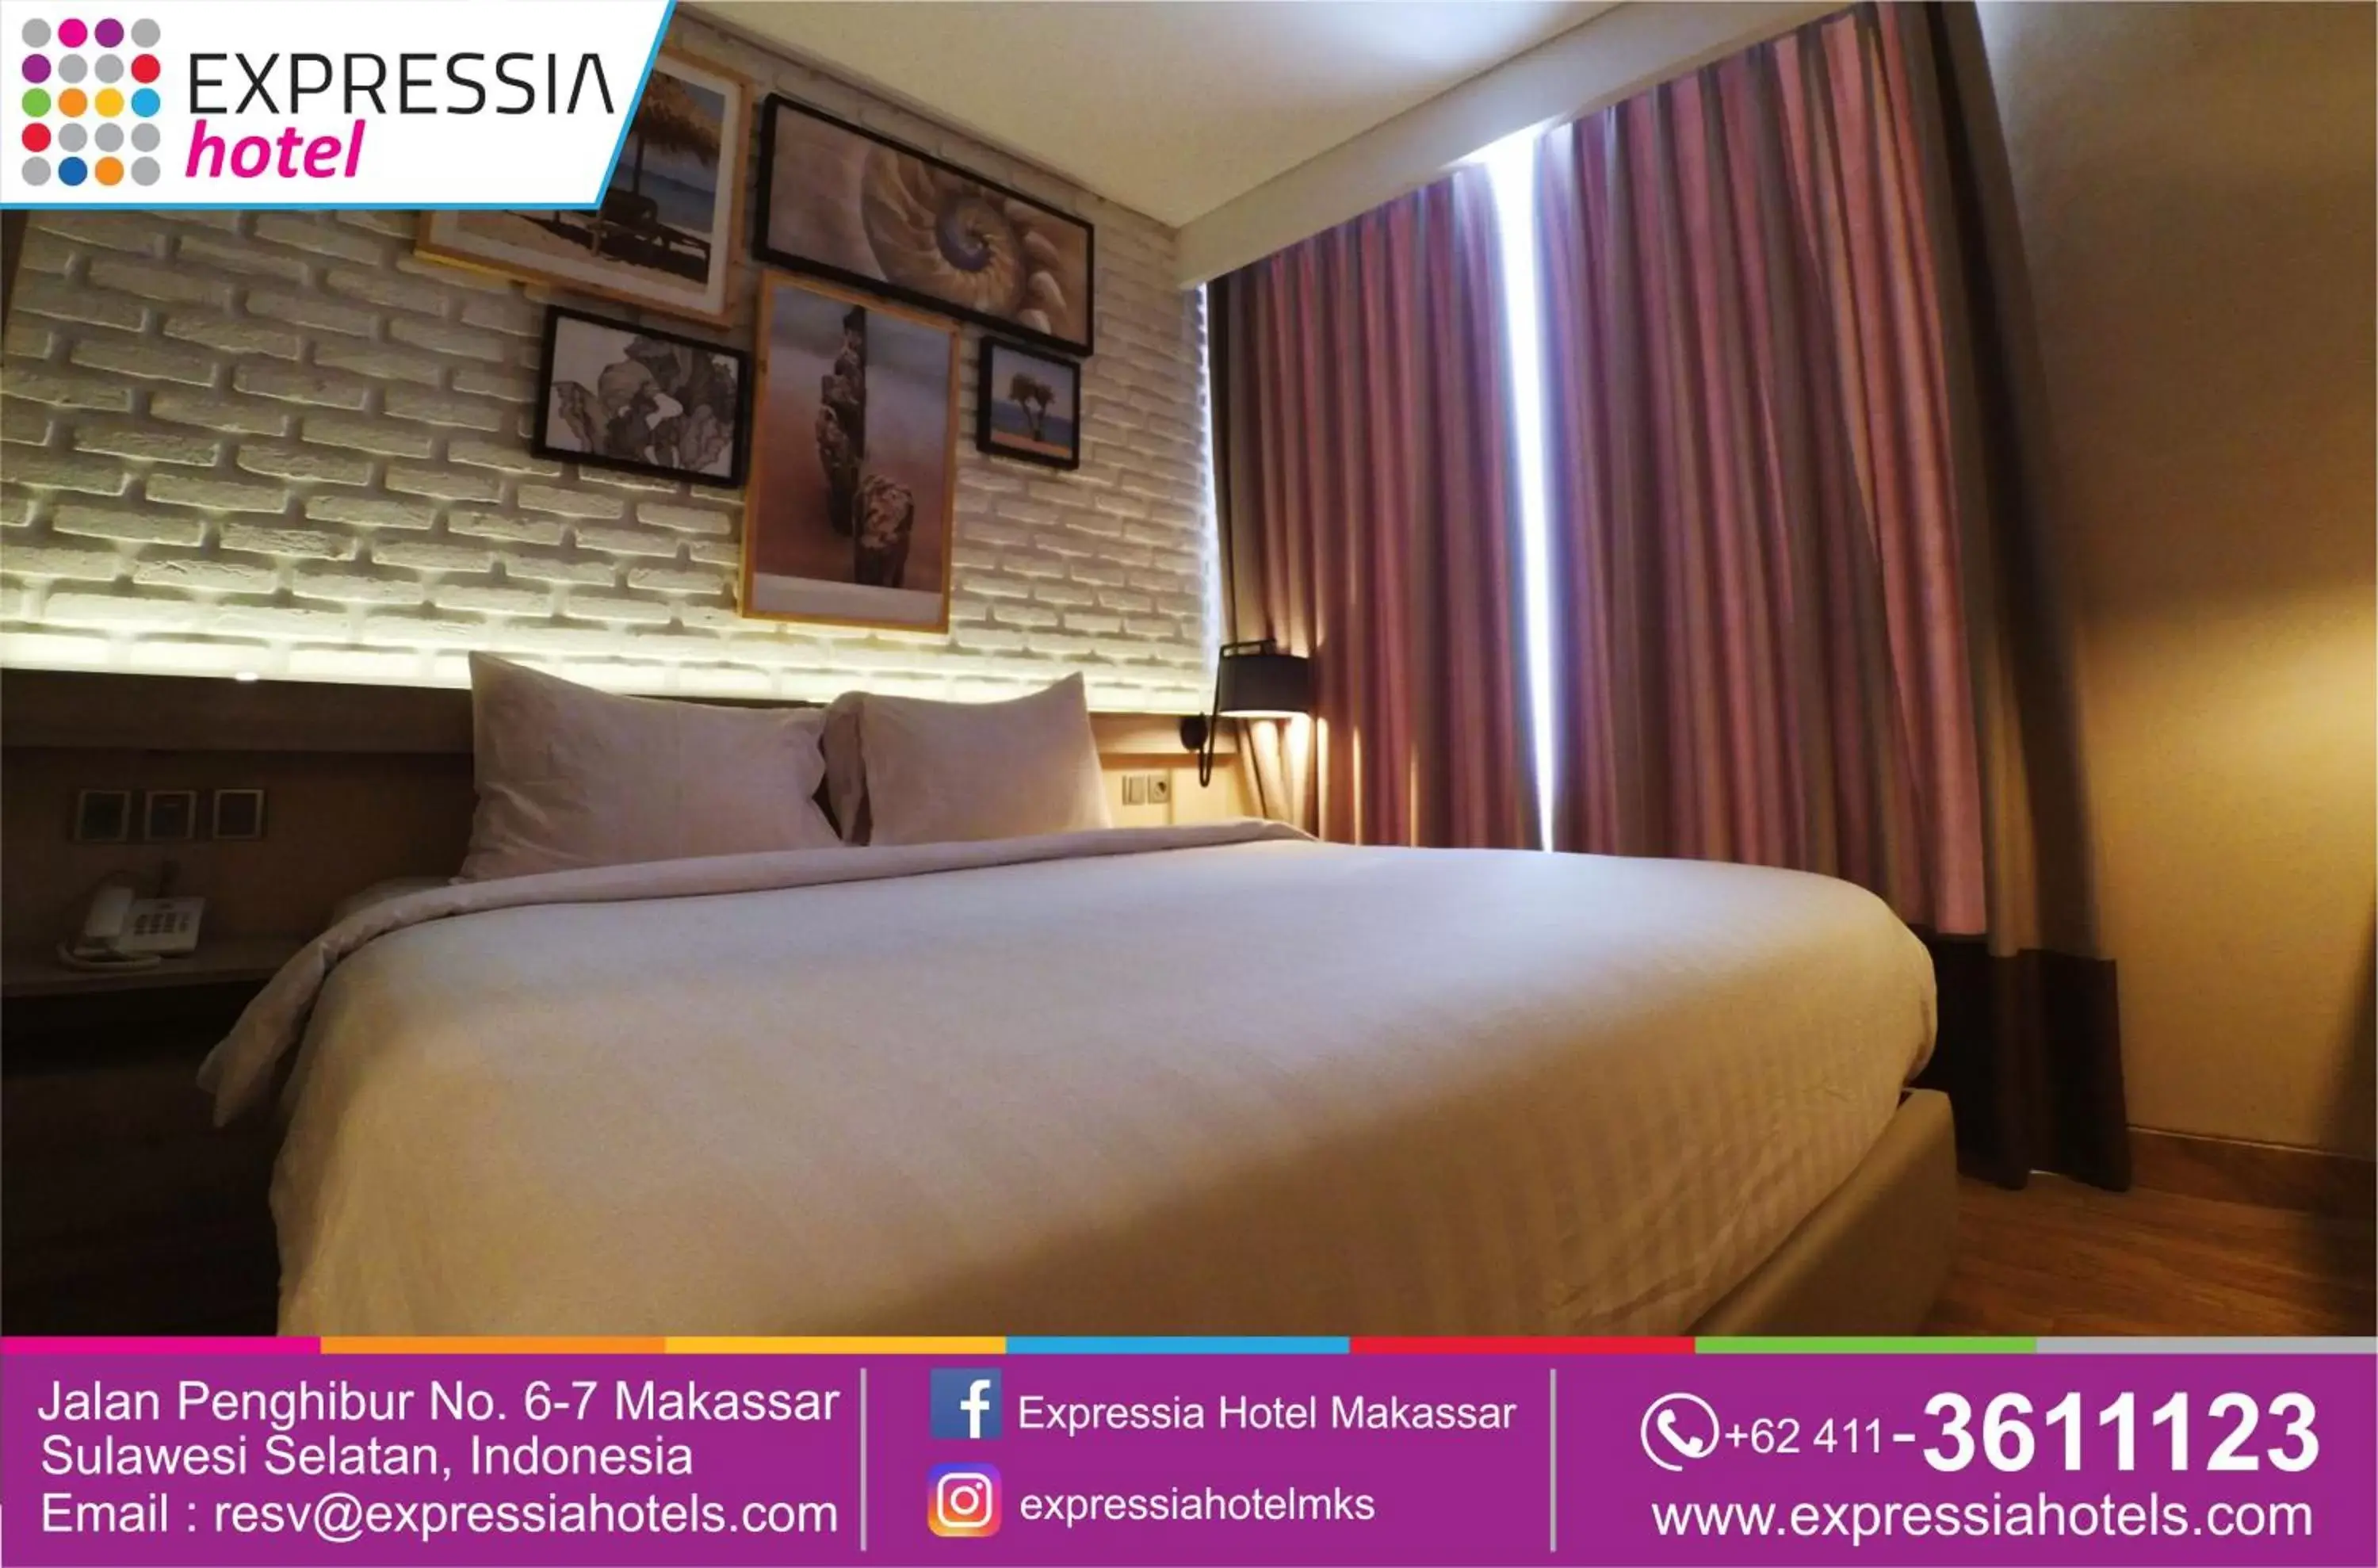 Bed in Expressia Hotel Makassar